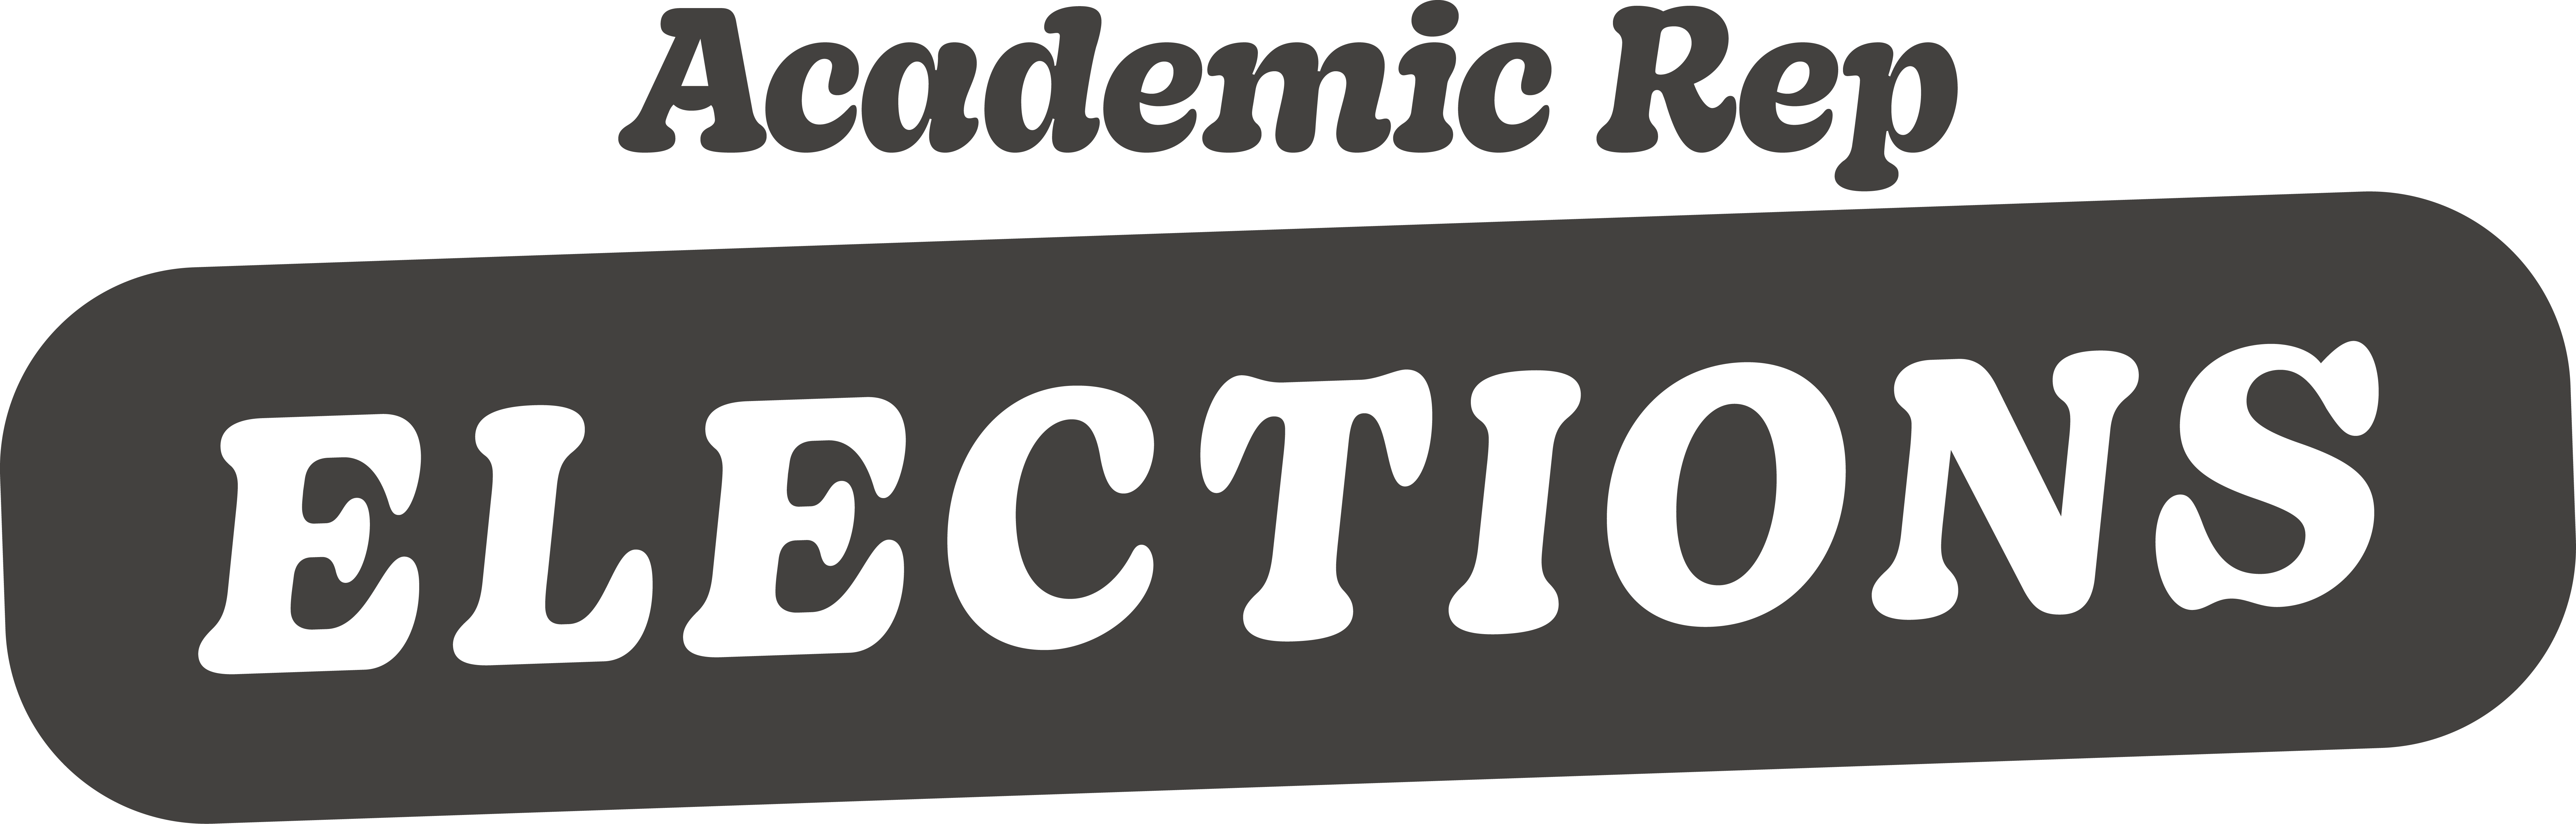 Academic Rep Elections logo